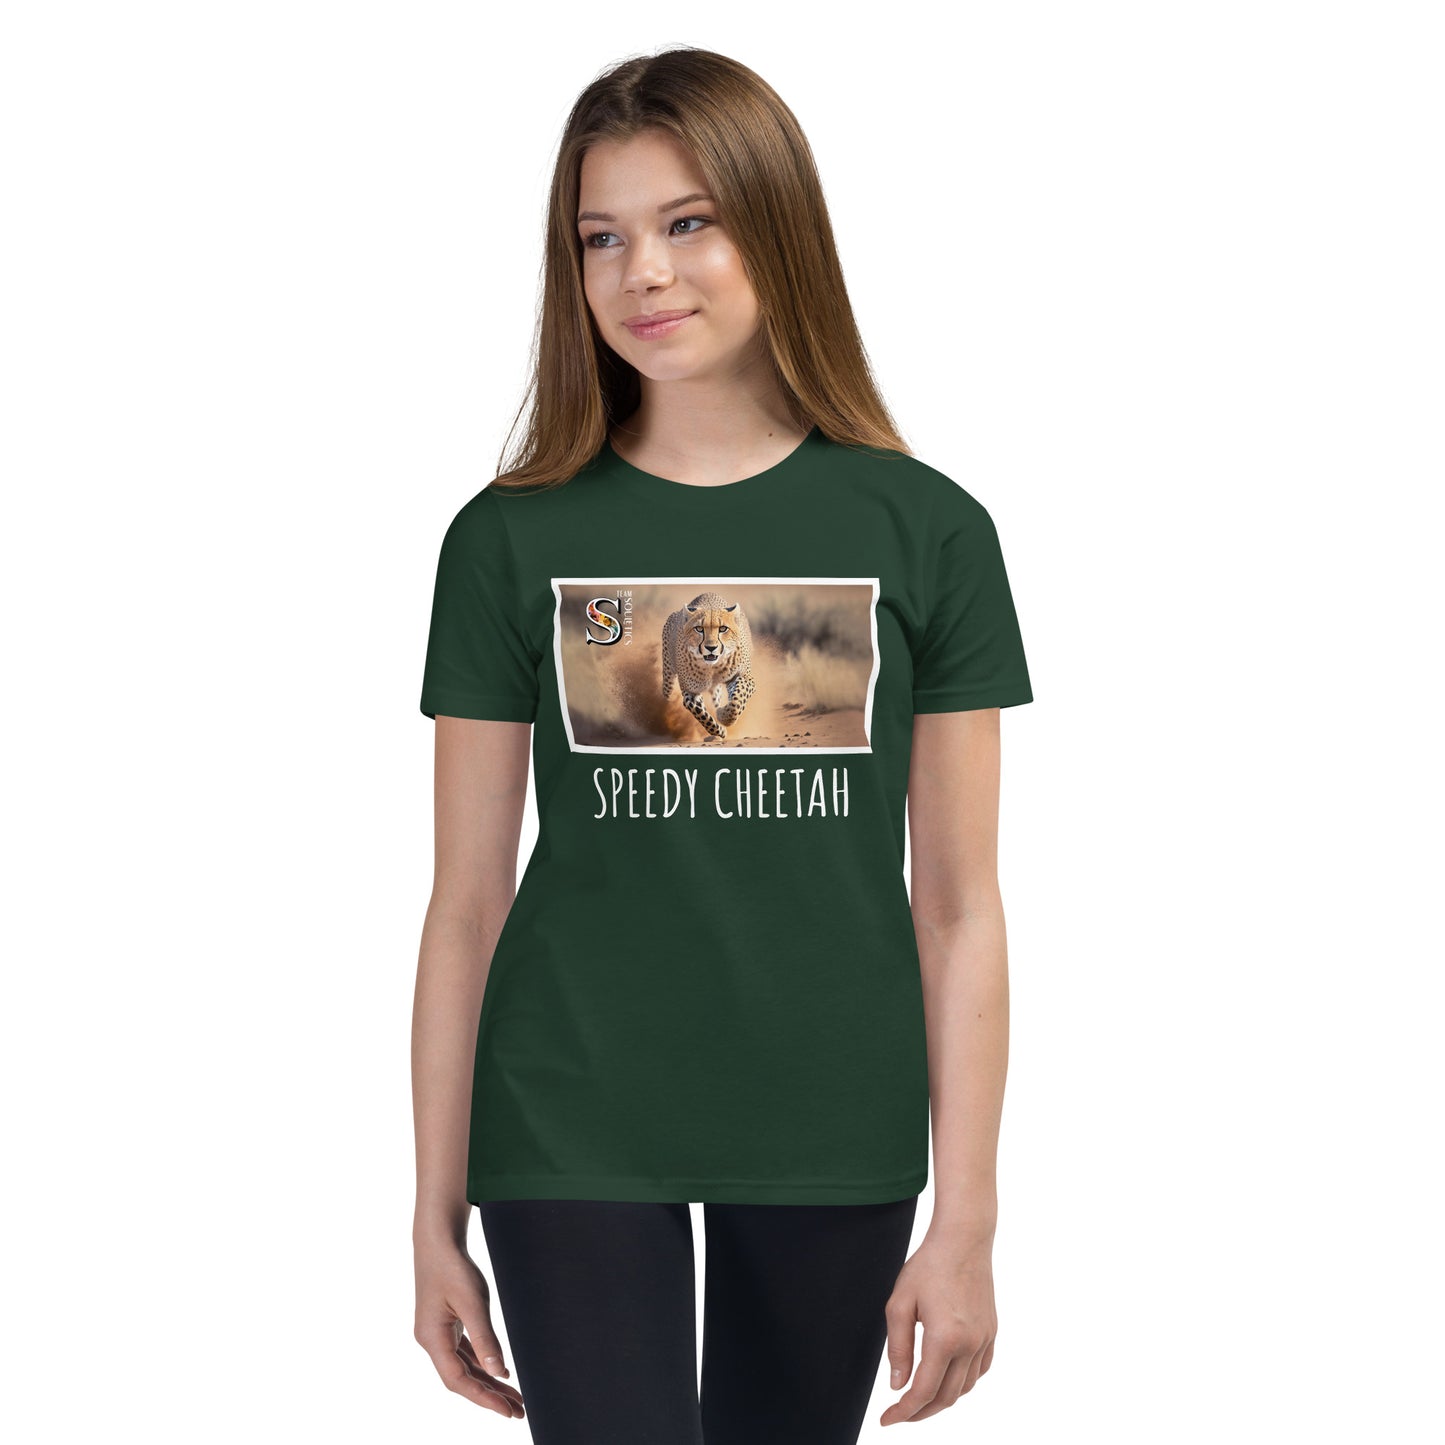 Speedy Cheetah by Lola Youth Short Sleeve T-Shirt